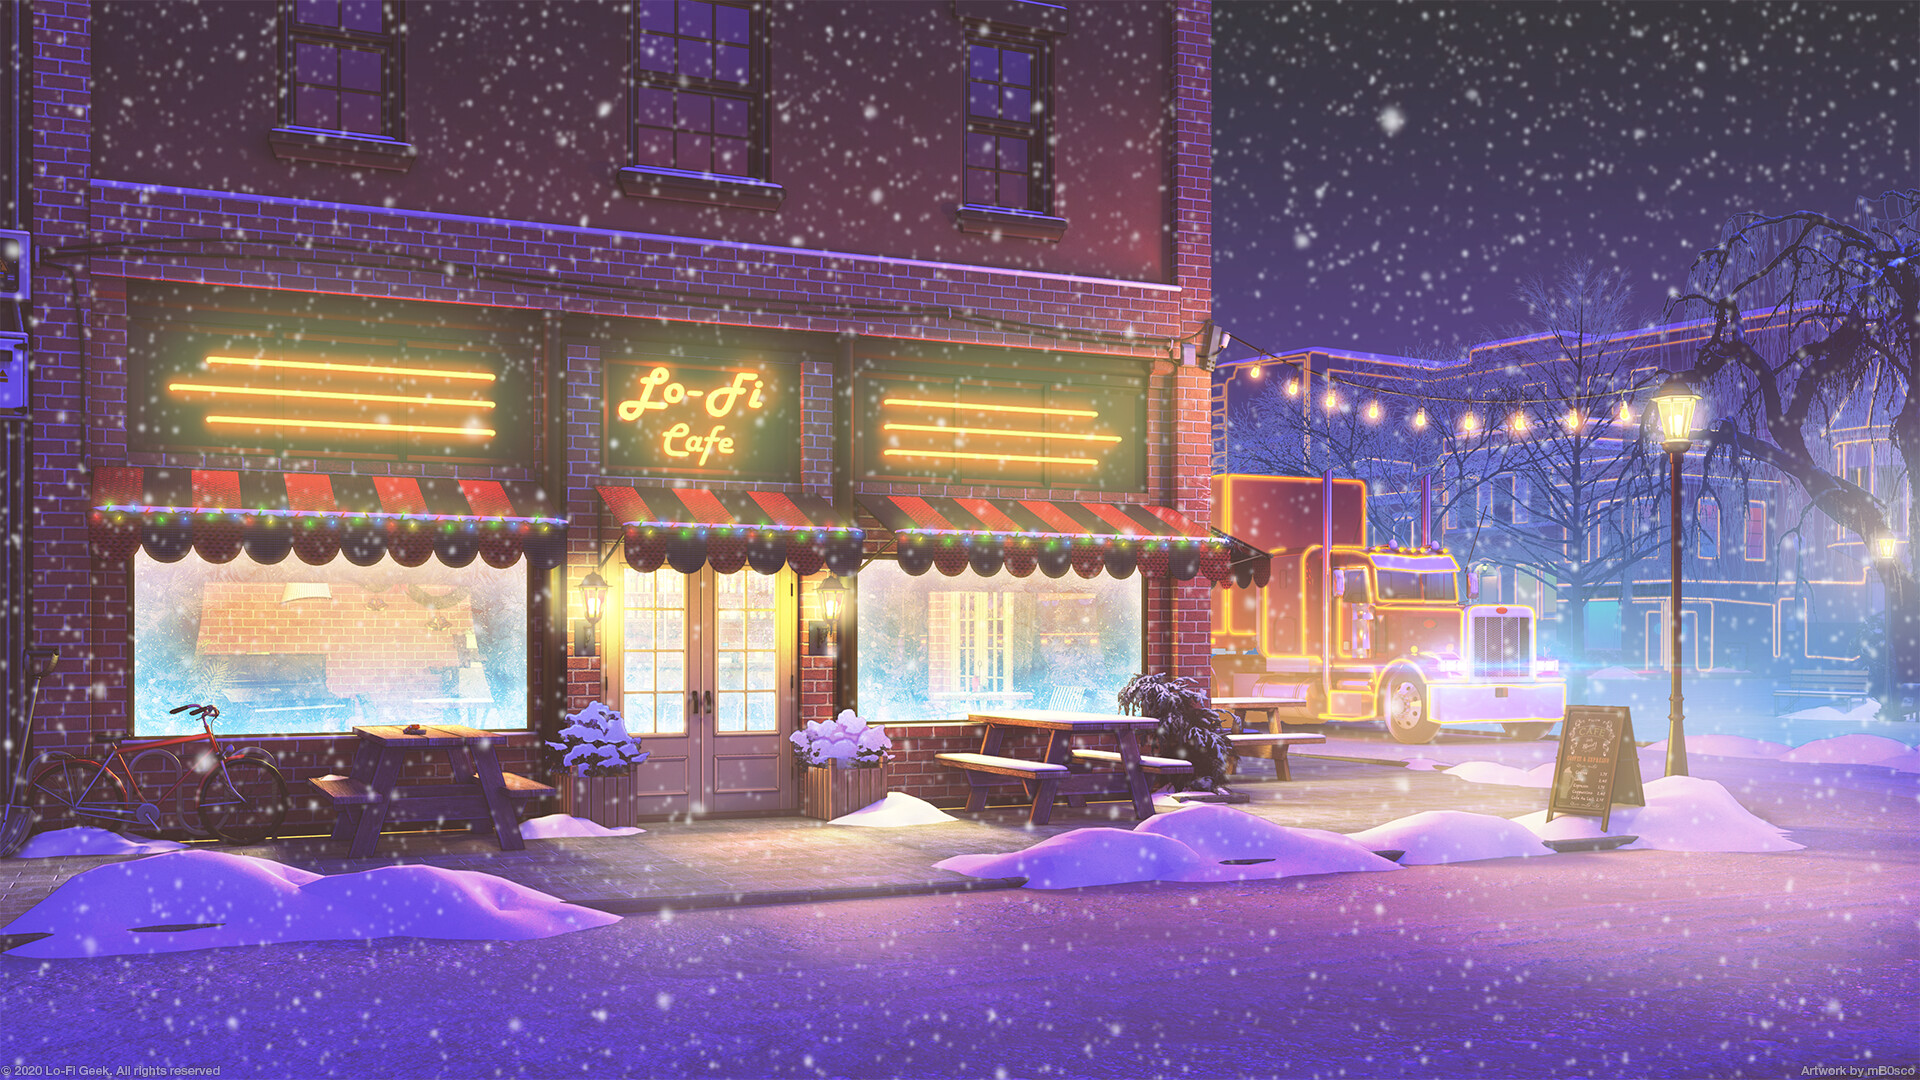 Bogdan MB0sco Digital Art Snow Snowing Truck Cafe Winter Night 1920x1080